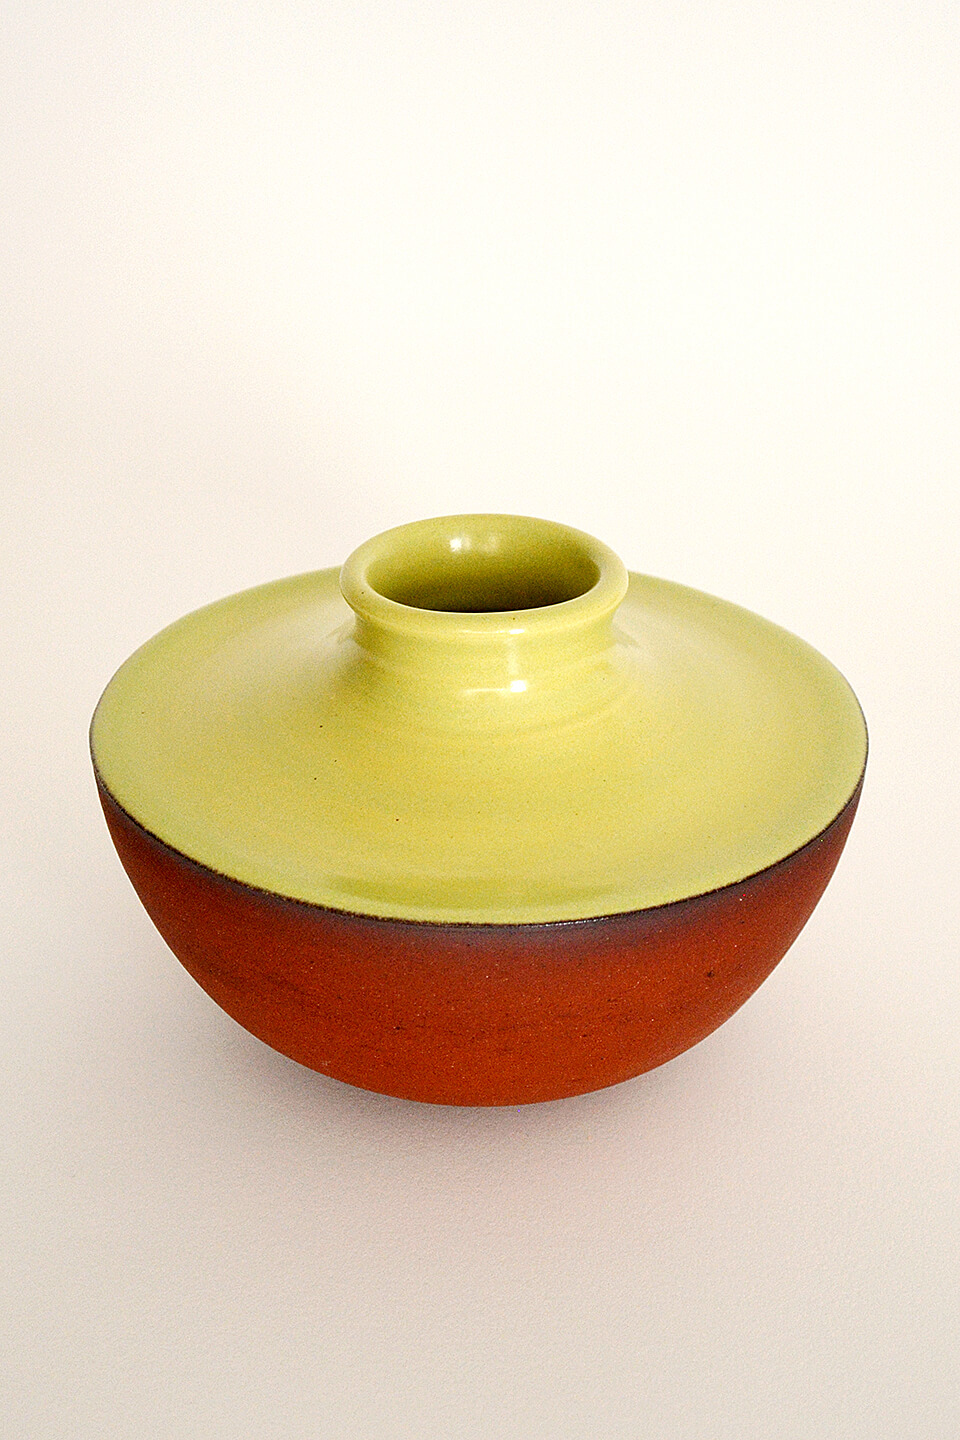 Satin Yellow Green Ceramic Vase No. 624